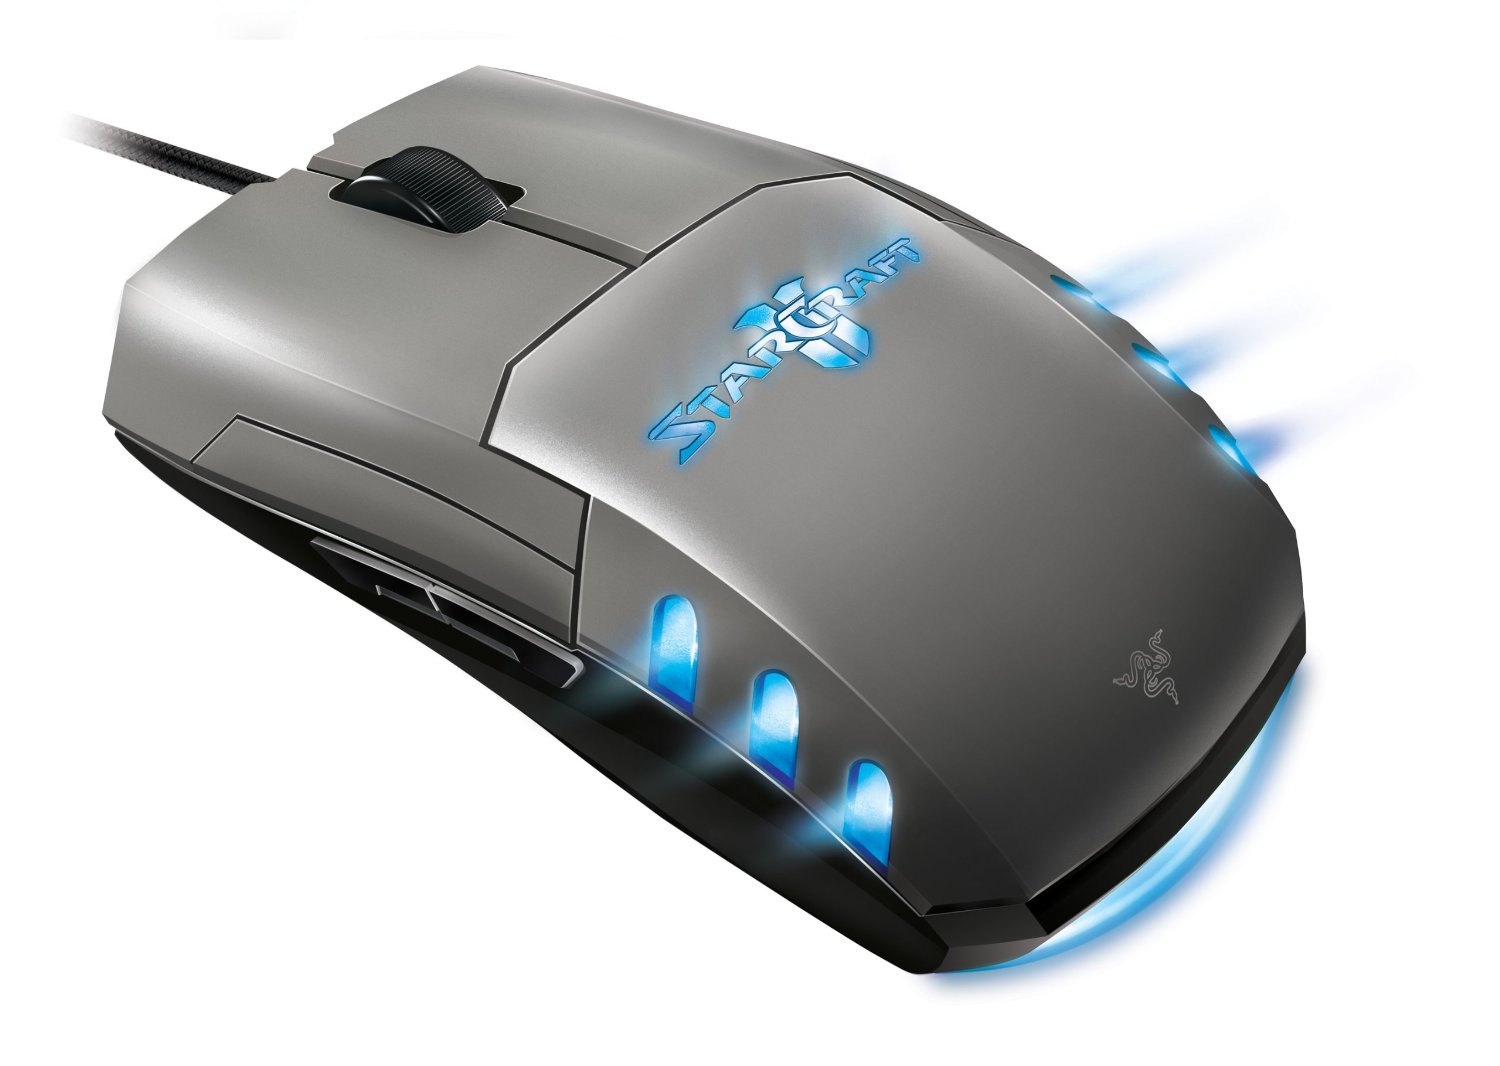 Starcraft 2 Razer Mouse